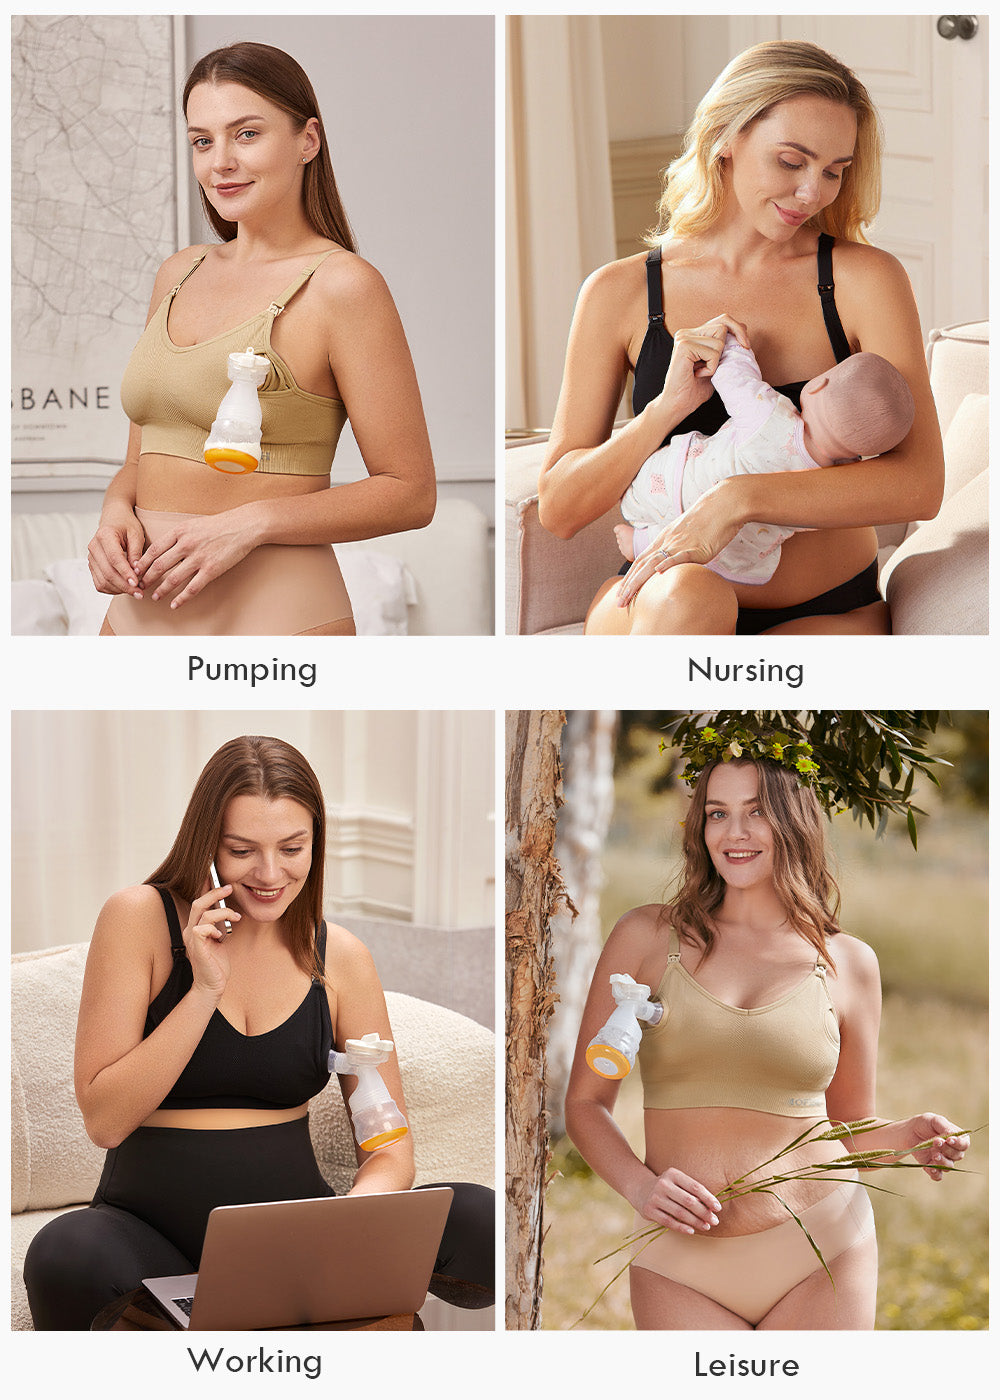 HOFISH Hands Free Pumping Bra Women Sport Bras Seamless Padded Nursing  Maternity Bra for Pregnancy/Breastfeeding/Working Out S-2XL S Pumping Bra:beige  X 1